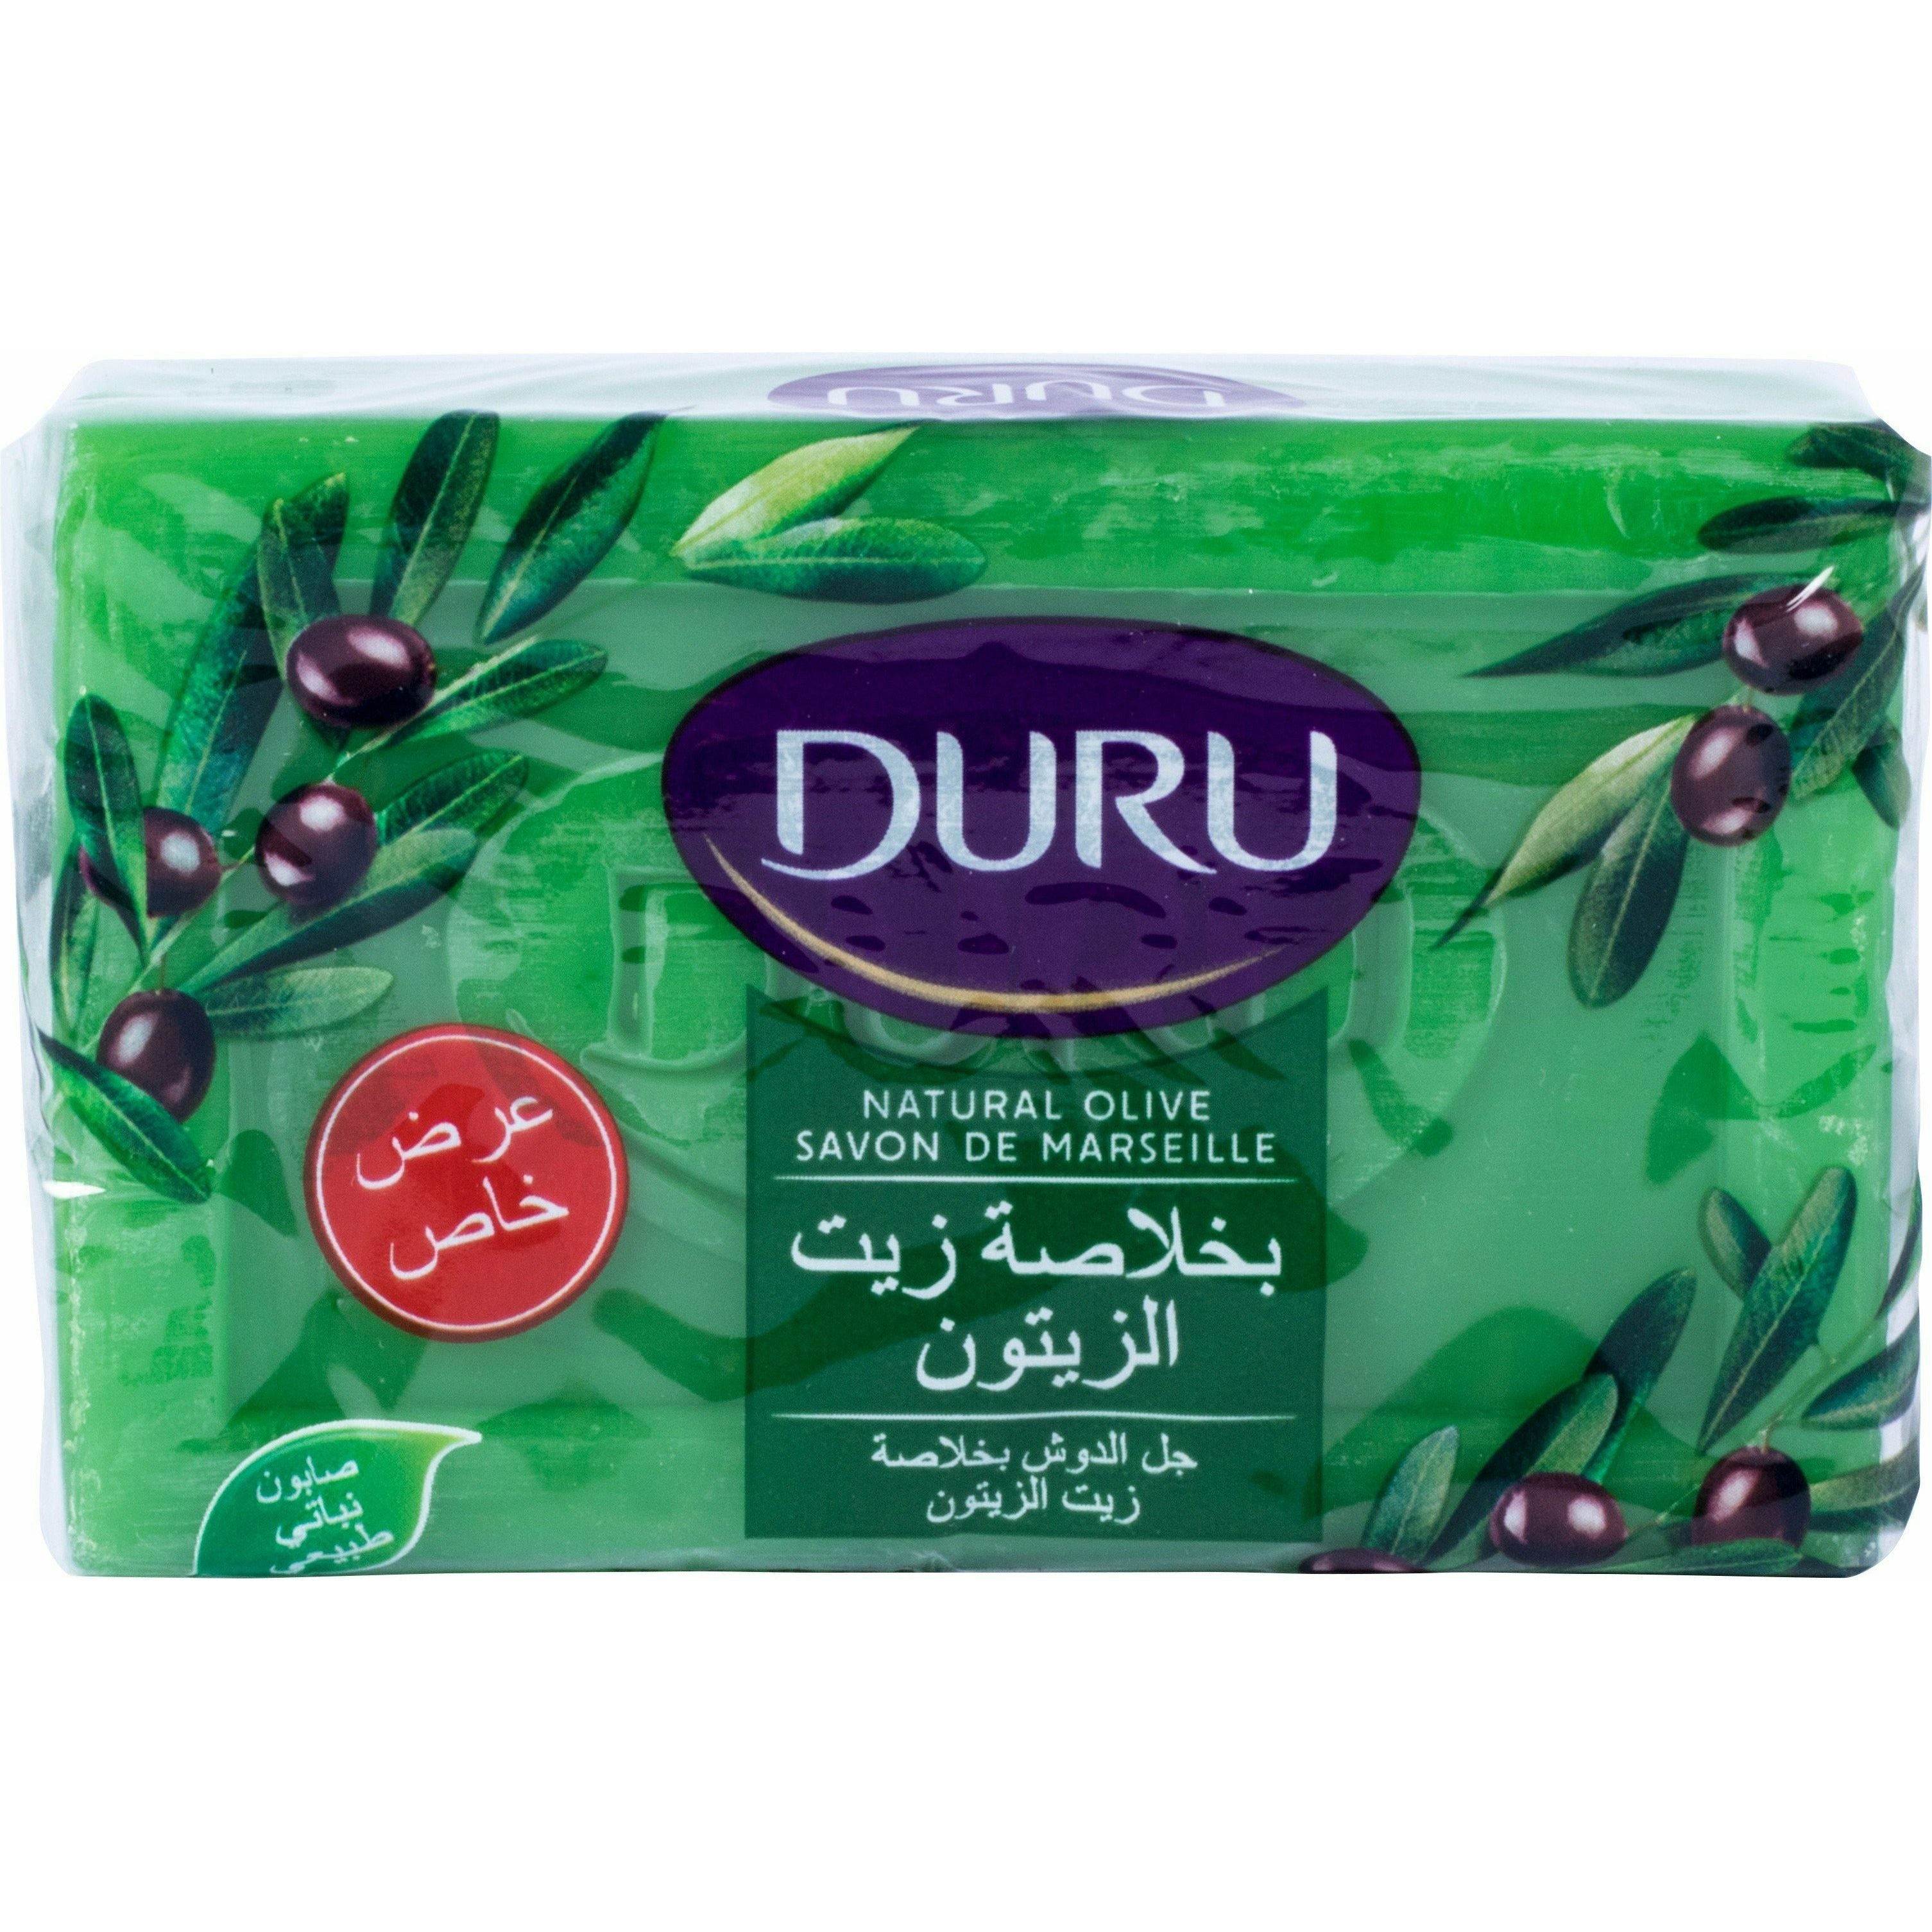 Duru Natural Olive Soap - 180g 1 Piece - Dollars and Sense